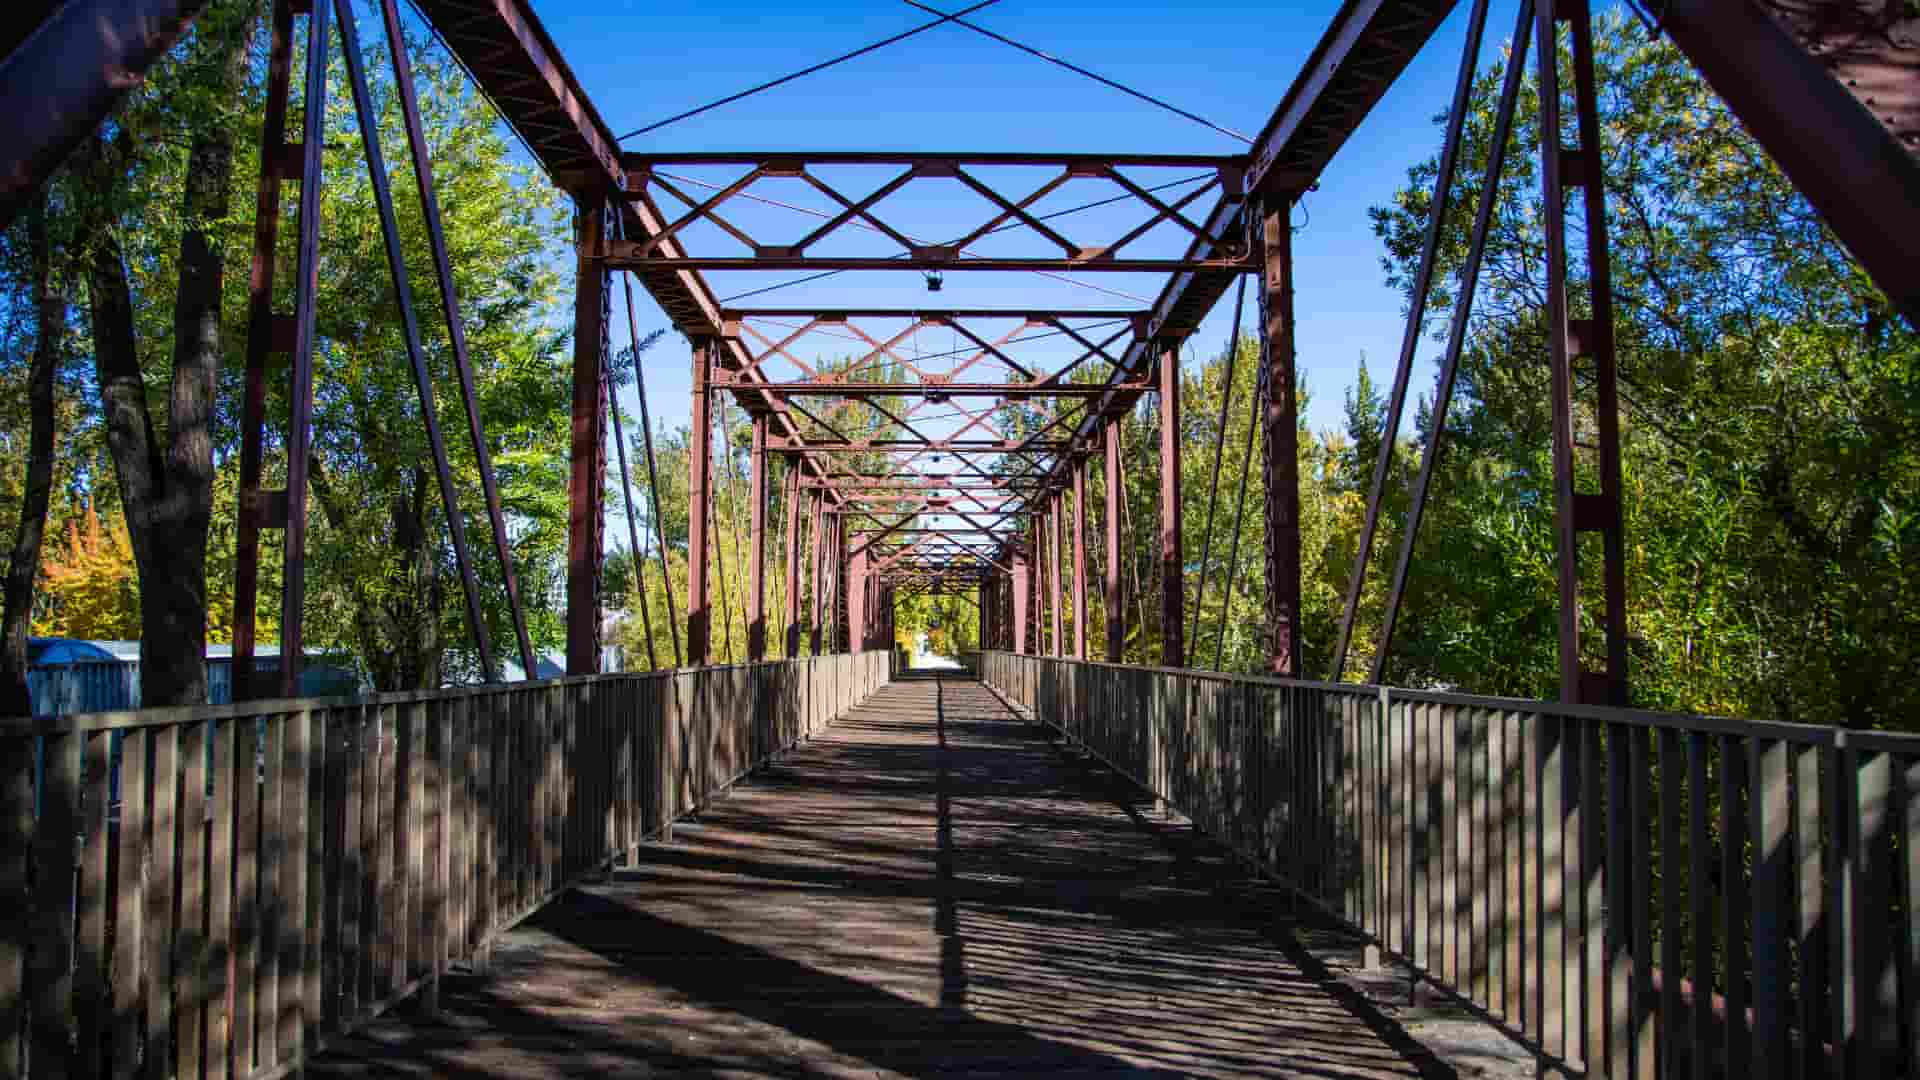 Image of the Ninth Street Bridge in Boise